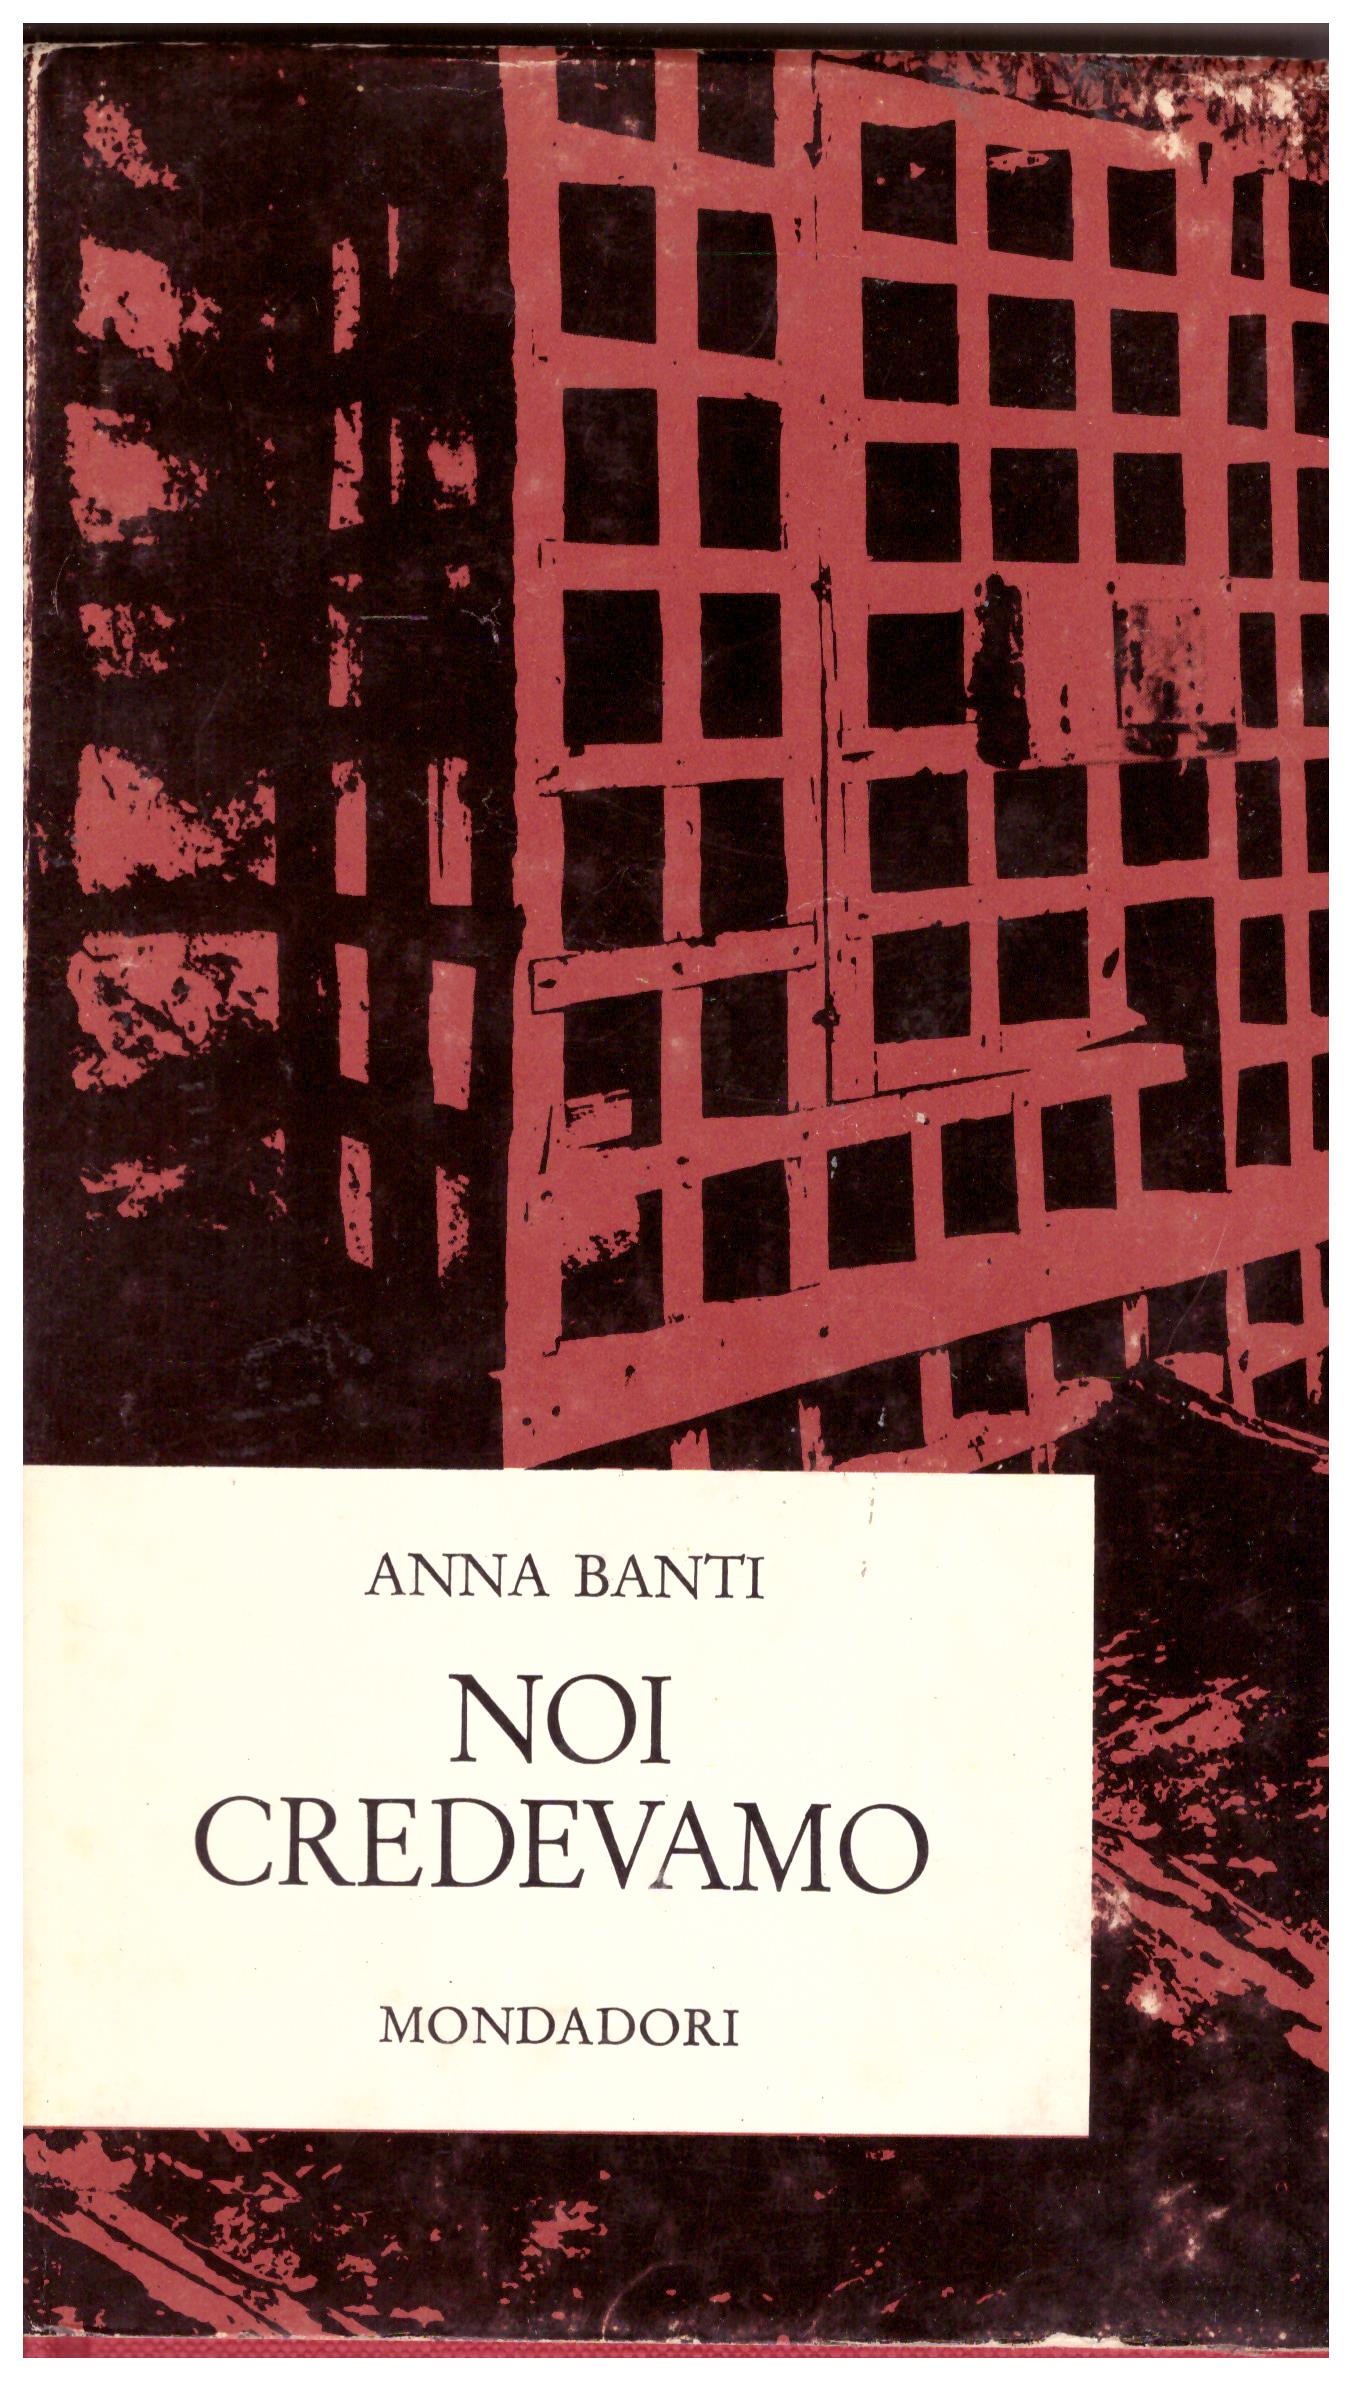 Titolo: Noi credevamo Autore: Anna Banti Editore: Mondadori, 1967